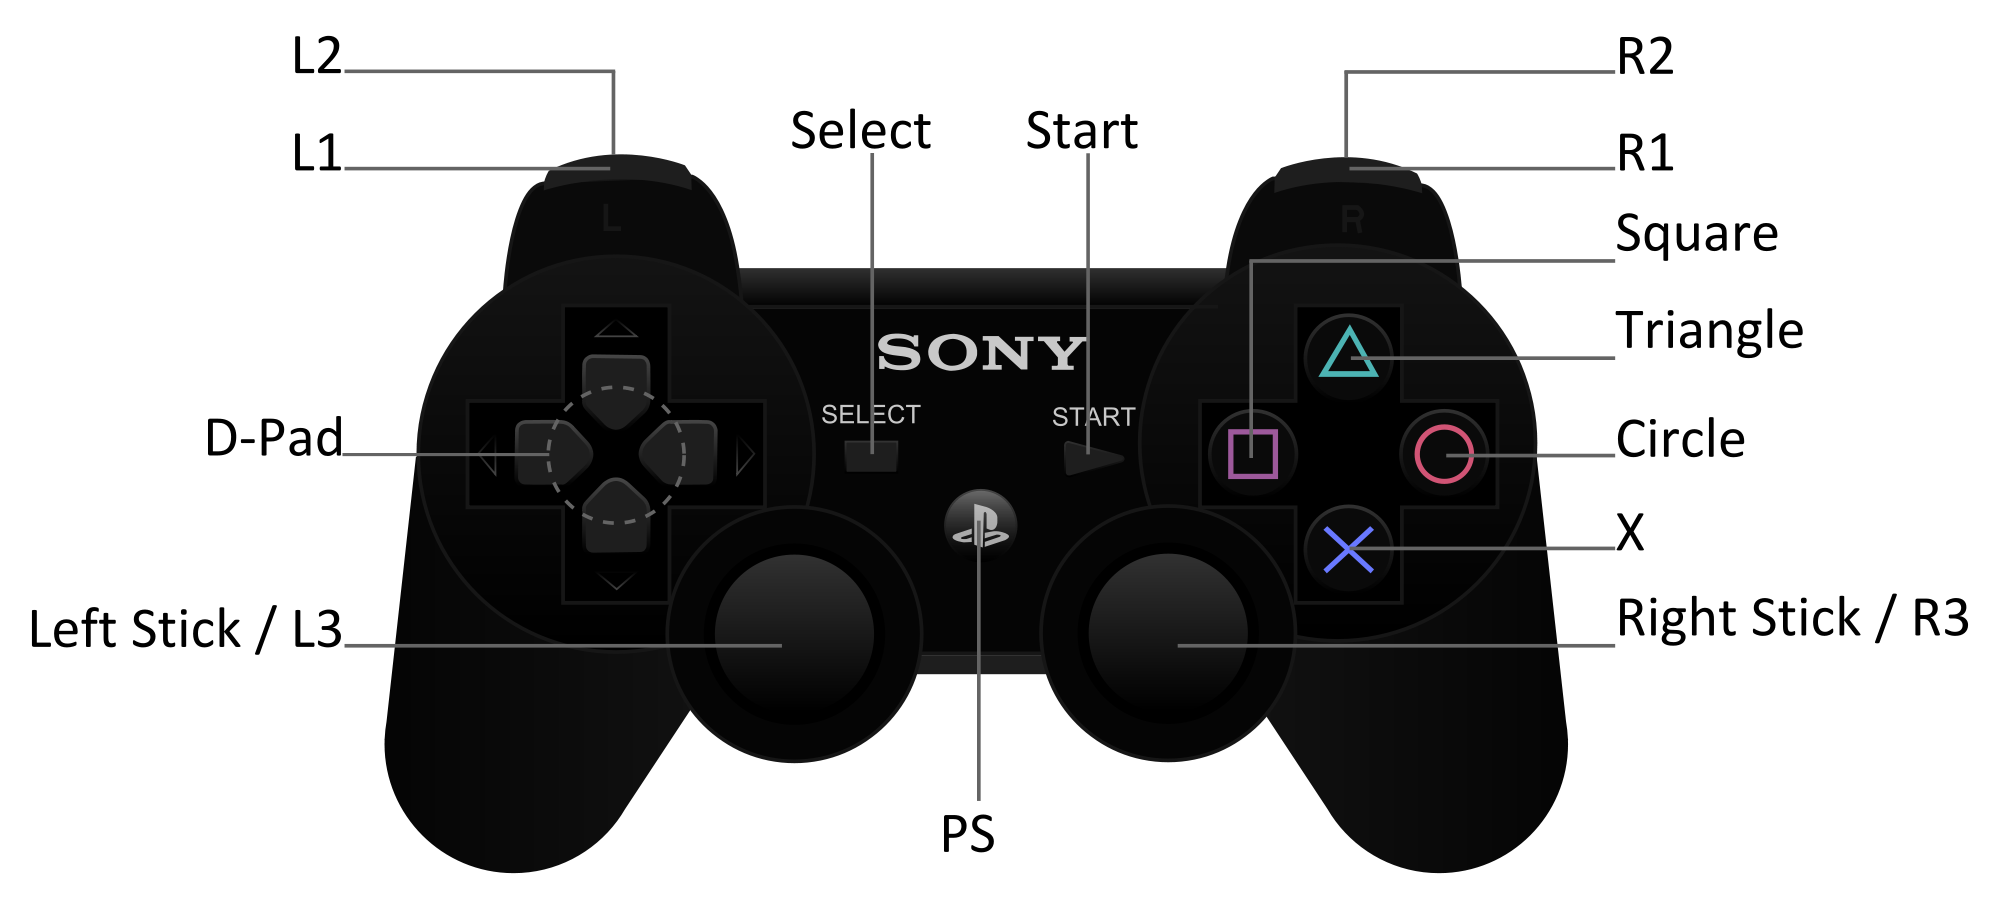 Ps4 геймпад кнопка r3. Кнопка r на джойстике Sony PLAYSTATION 4. L3 кнопка на джойстике пс3. L2 lt на джойстике ps5. Обозначения на джойстике